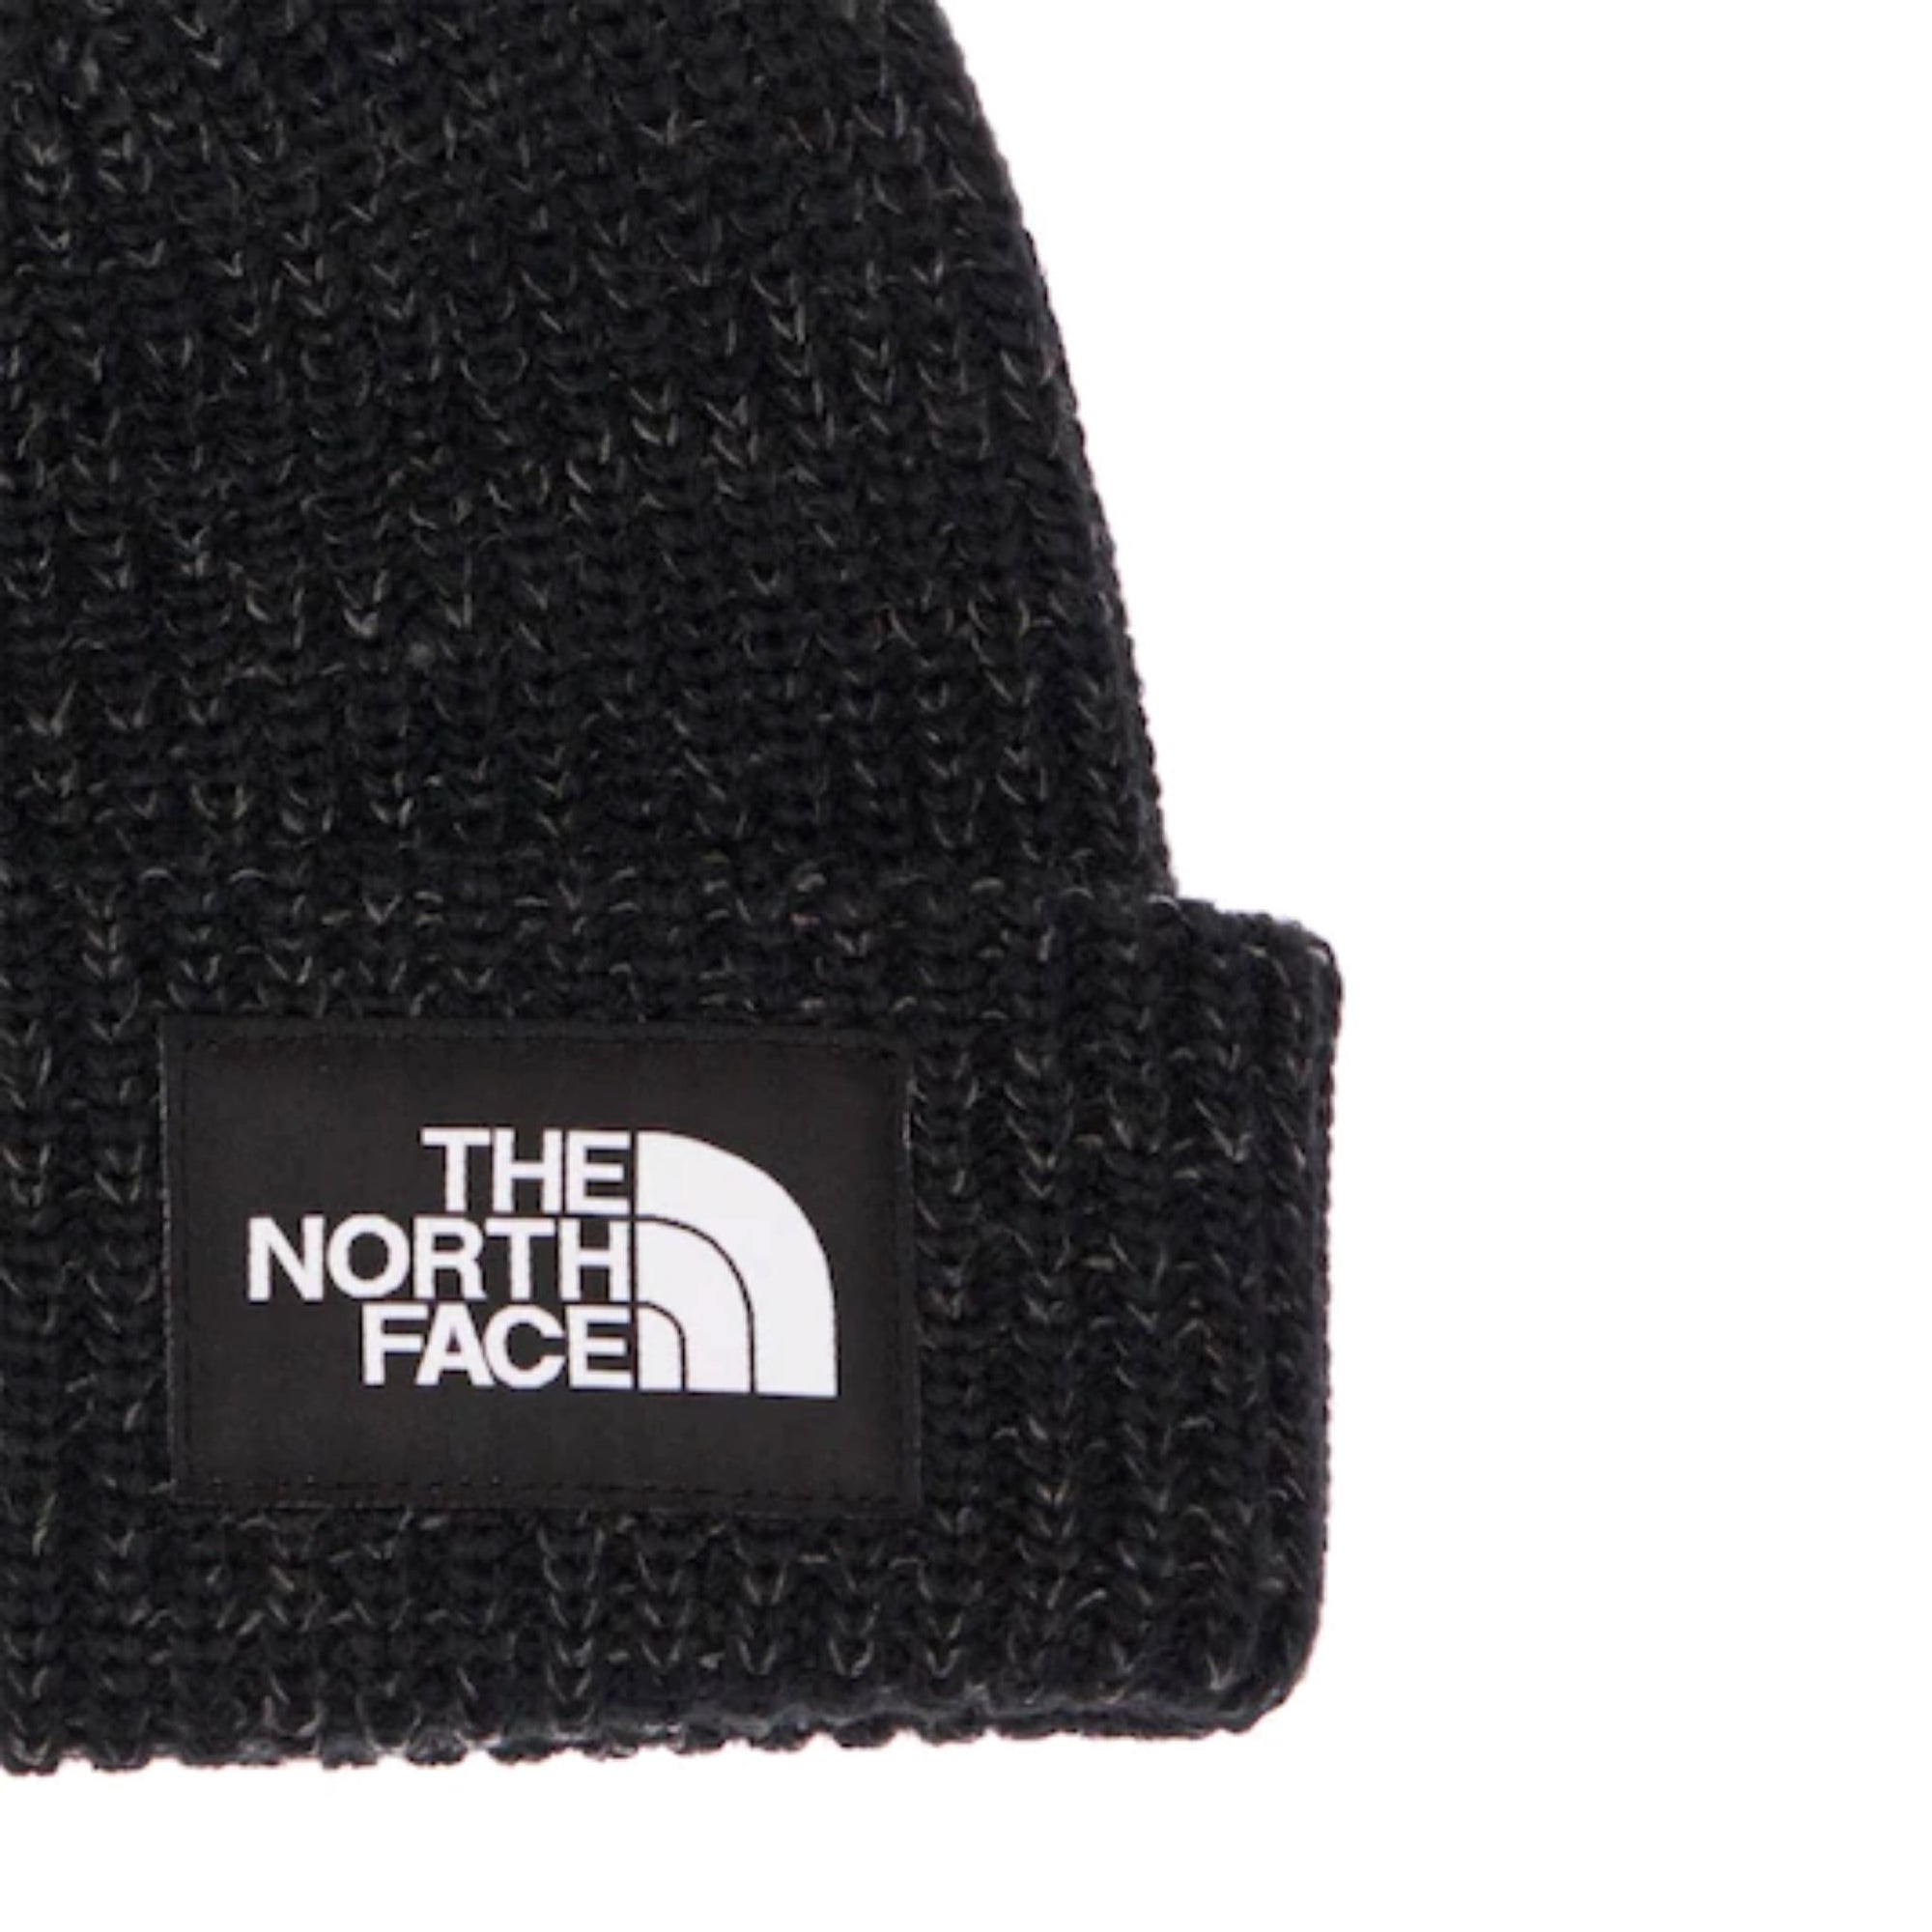 The North Face Salty Dog Beanie - Black Beanies The North Face OSFM 